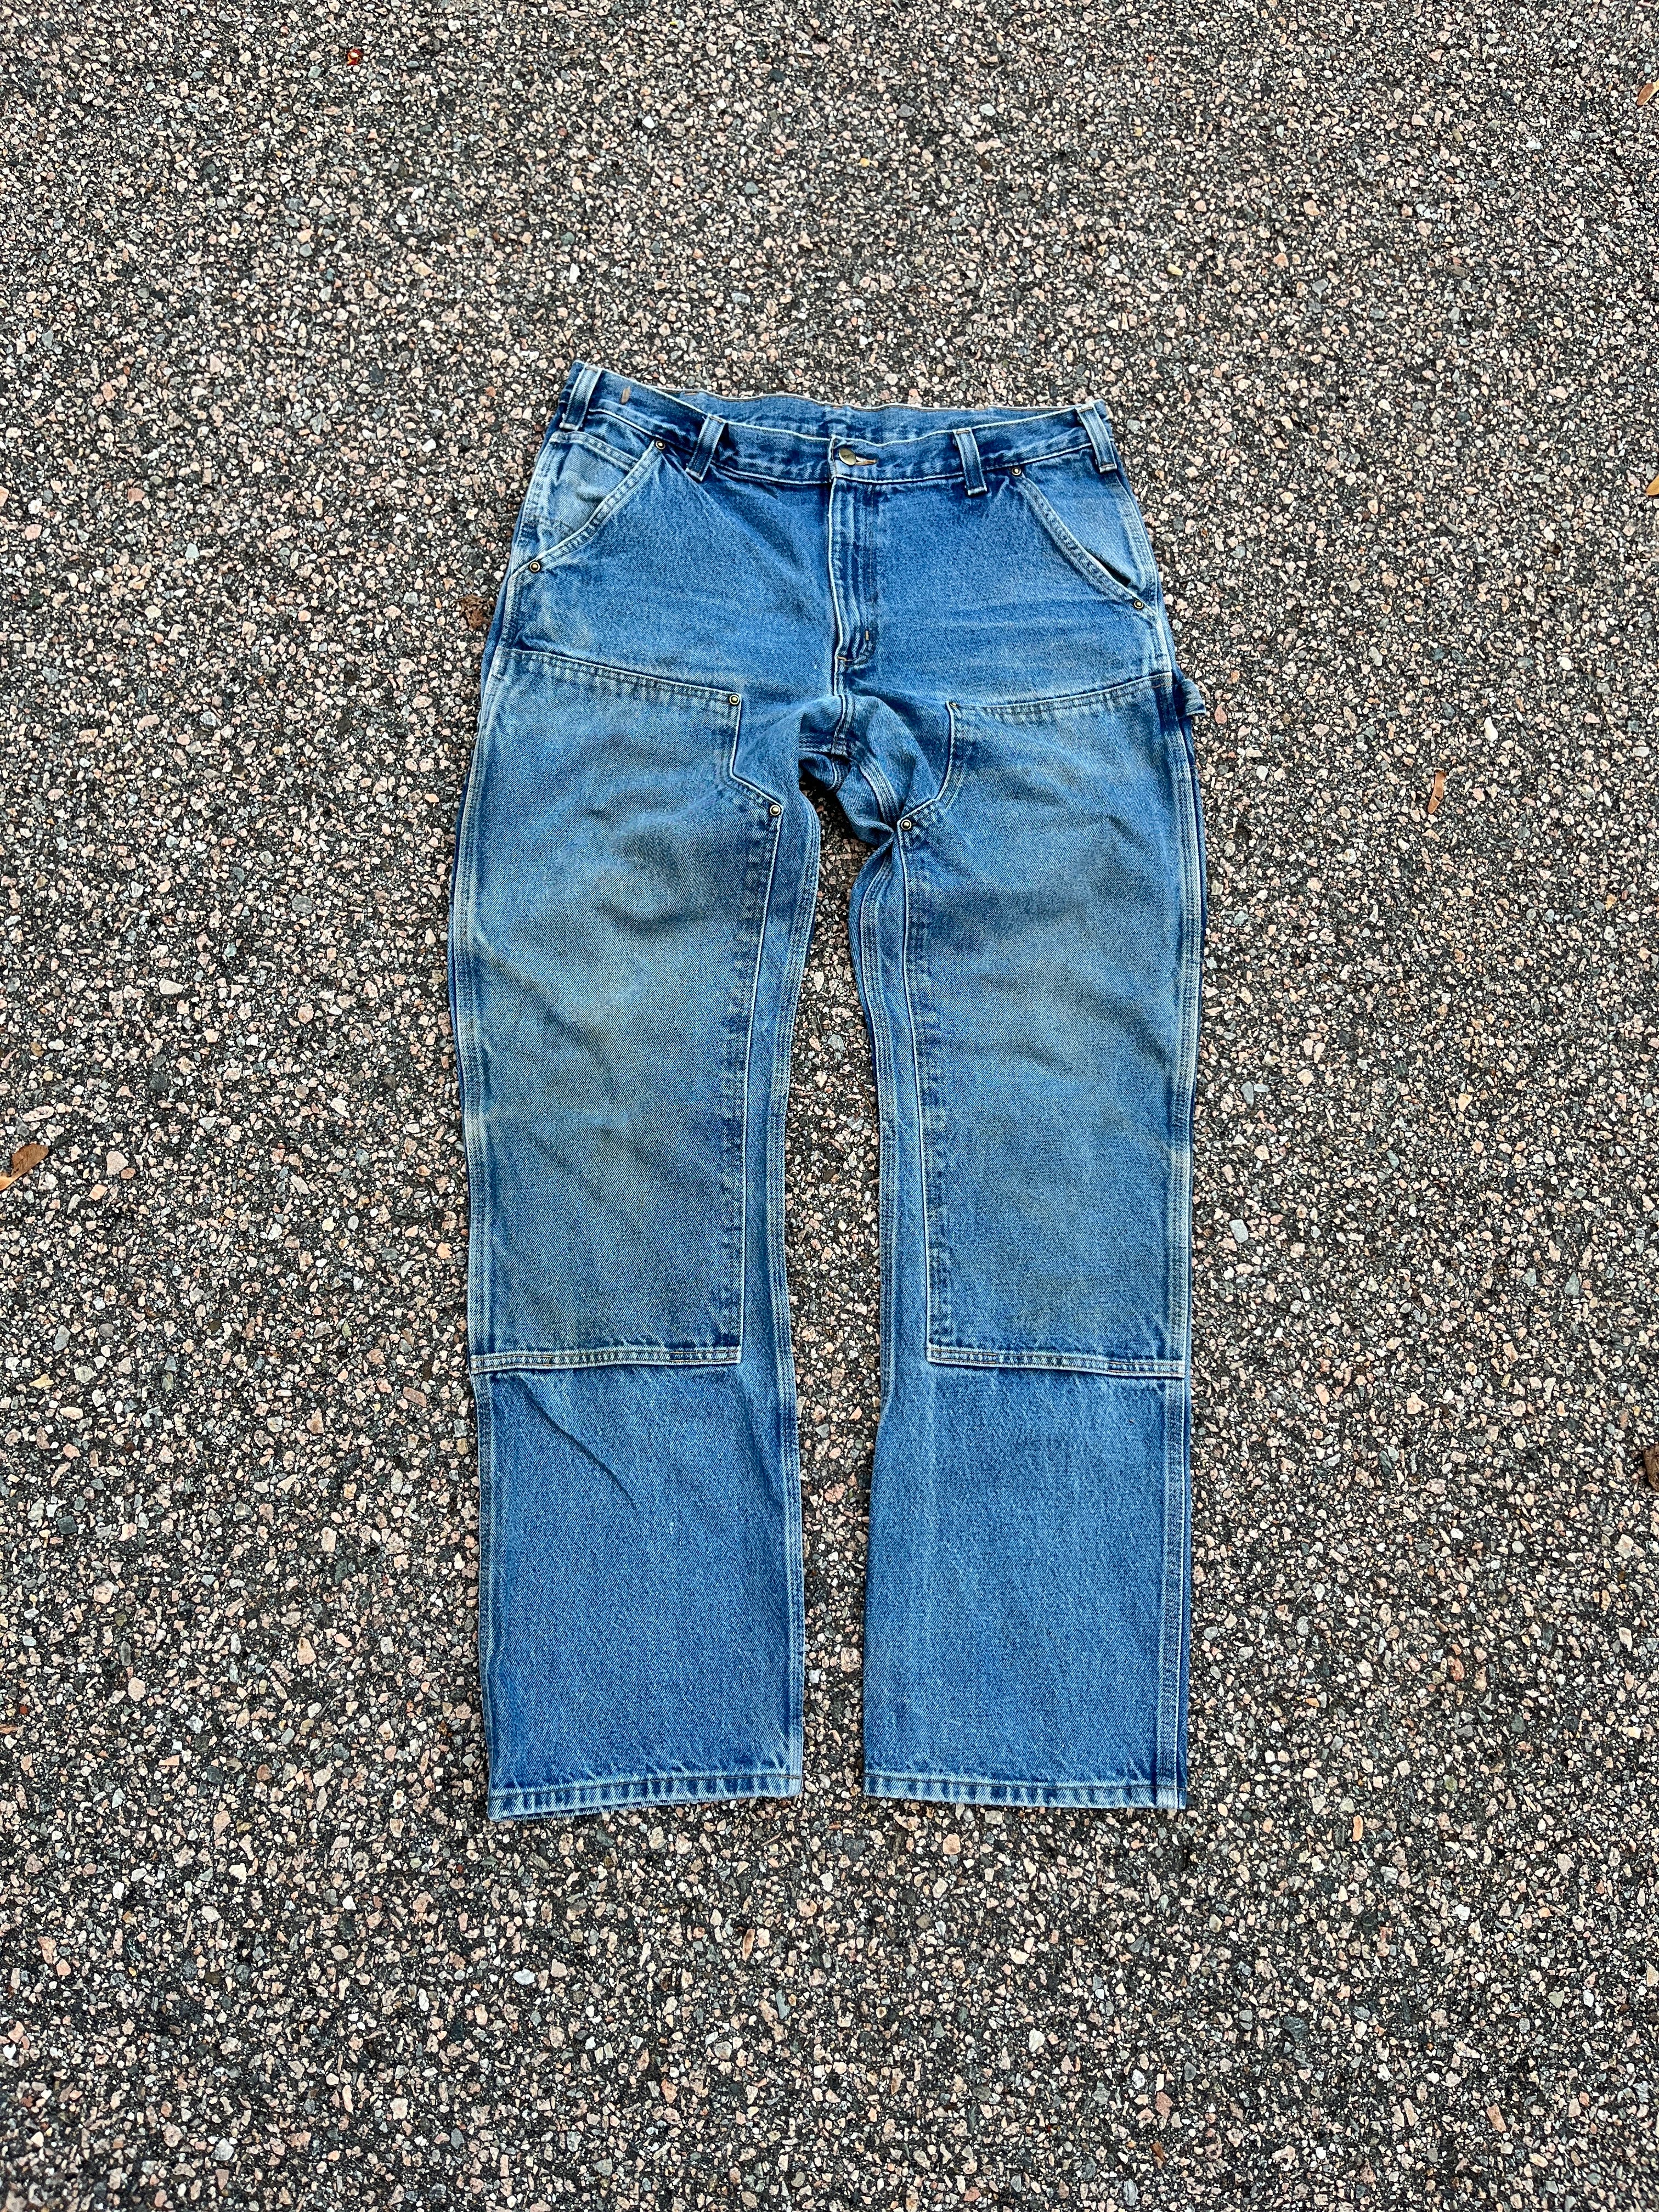 Faded Denim Carhartt Double Knee Pants - 36 x 33